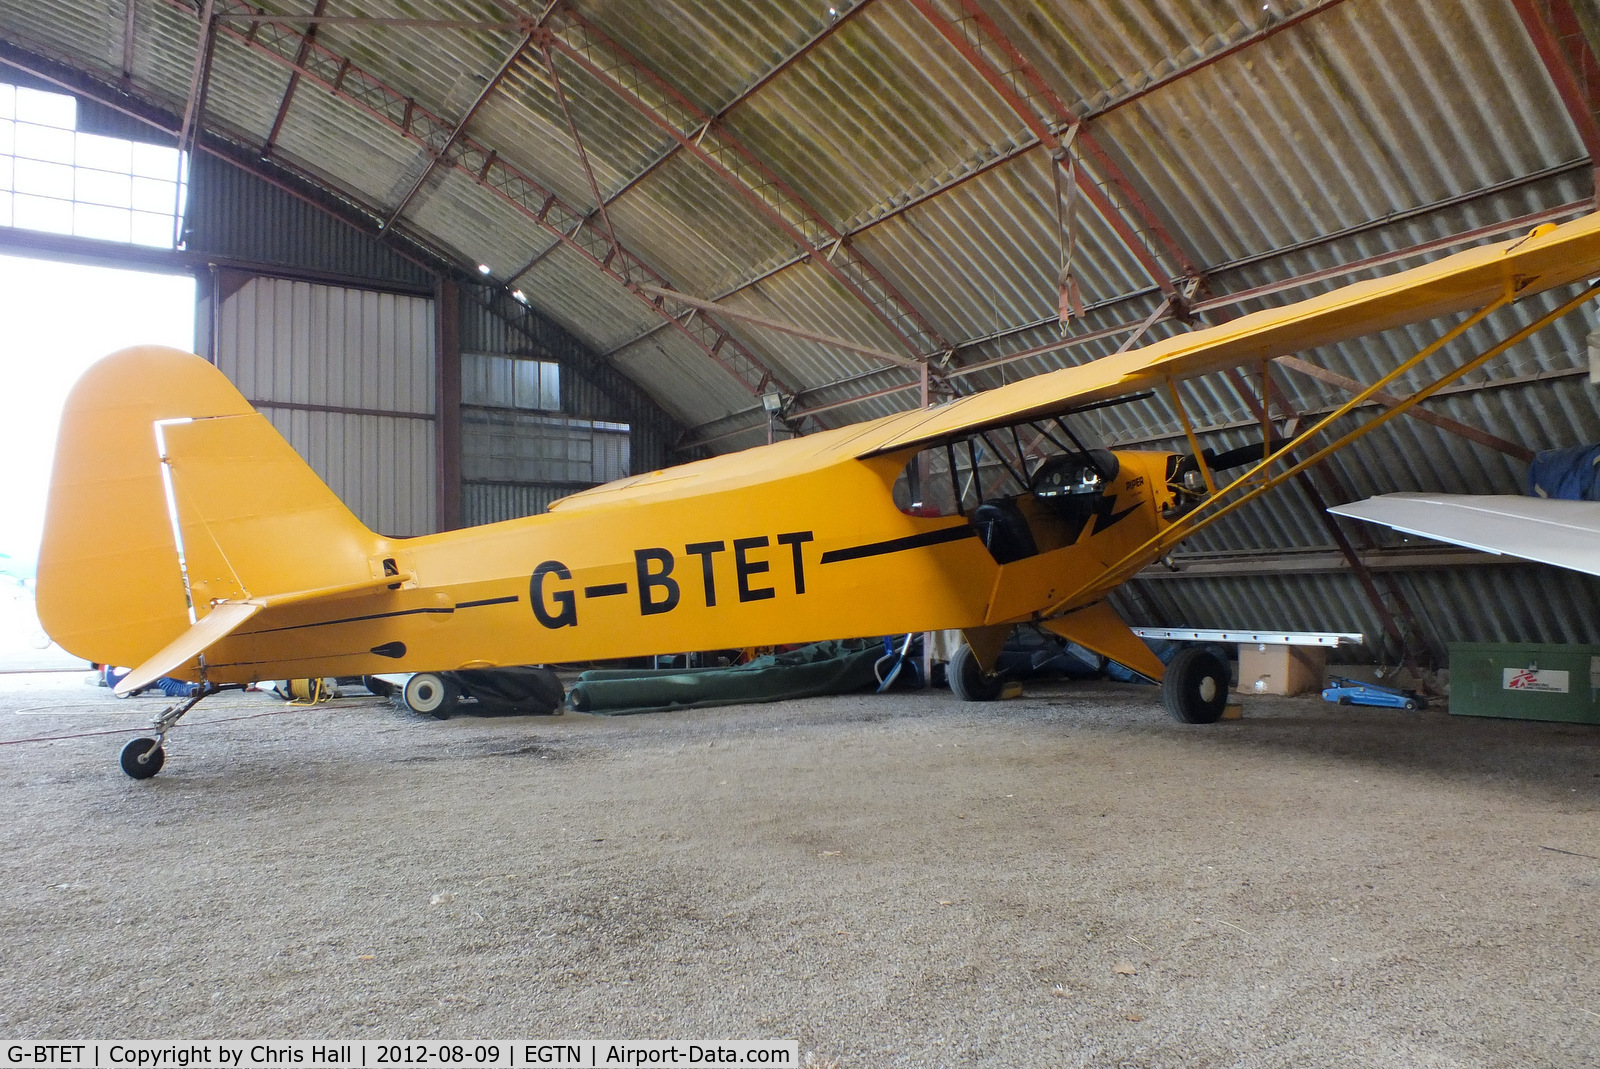 G-BTET, 1991 Piper J3C-65 Cub Cub C/N 18296, at Enstone Airfield